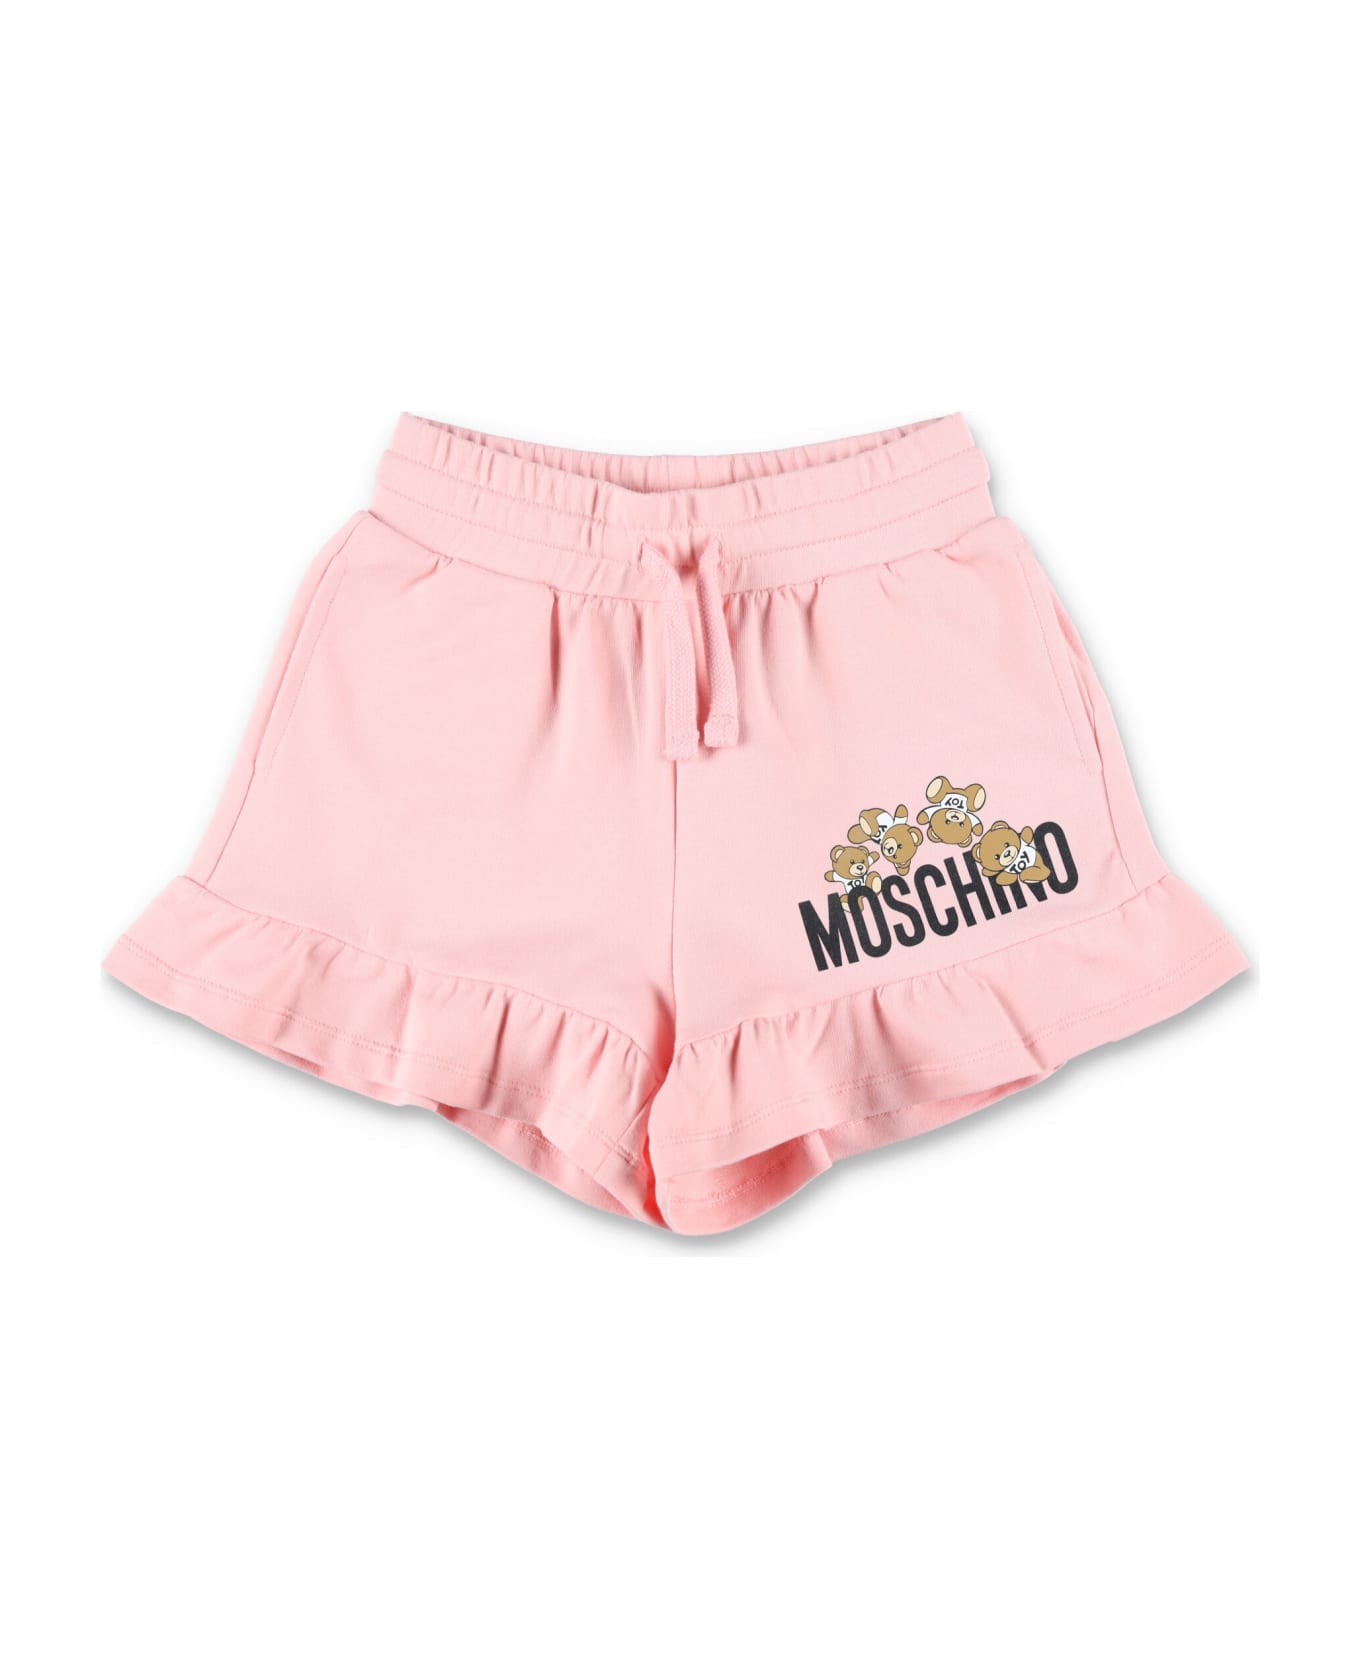 Moschino Shorts Volan - SUGAR ROSE